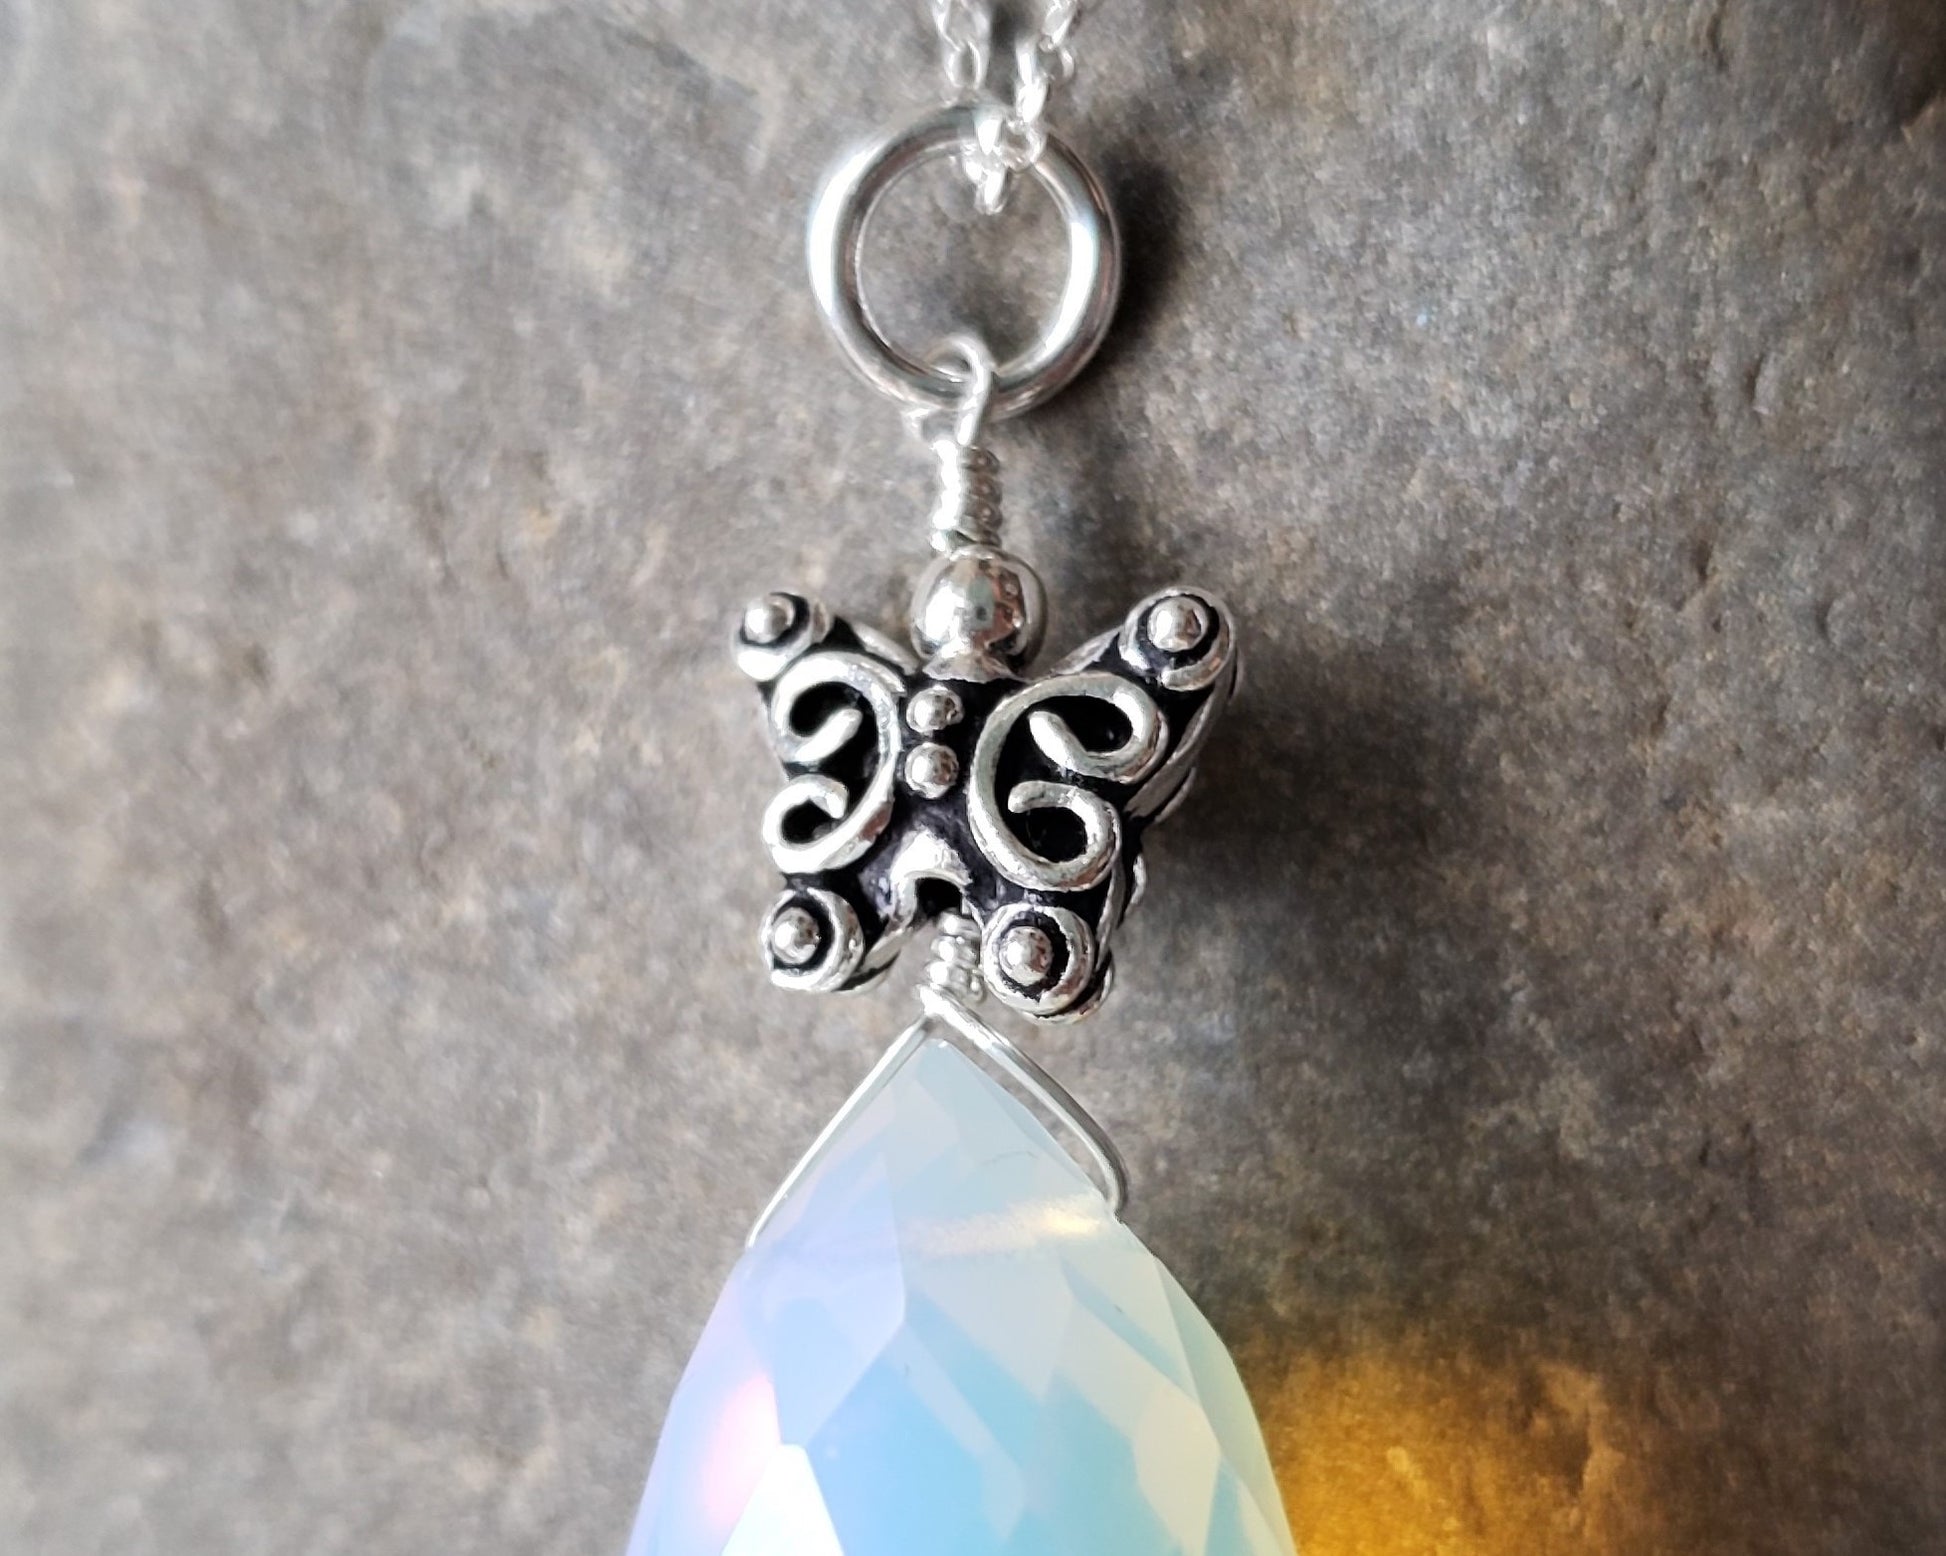 Butterfly Opal Dreams Pendant, Butterfly on top of Large Opalite Drop shape stone, pendant on chain. 